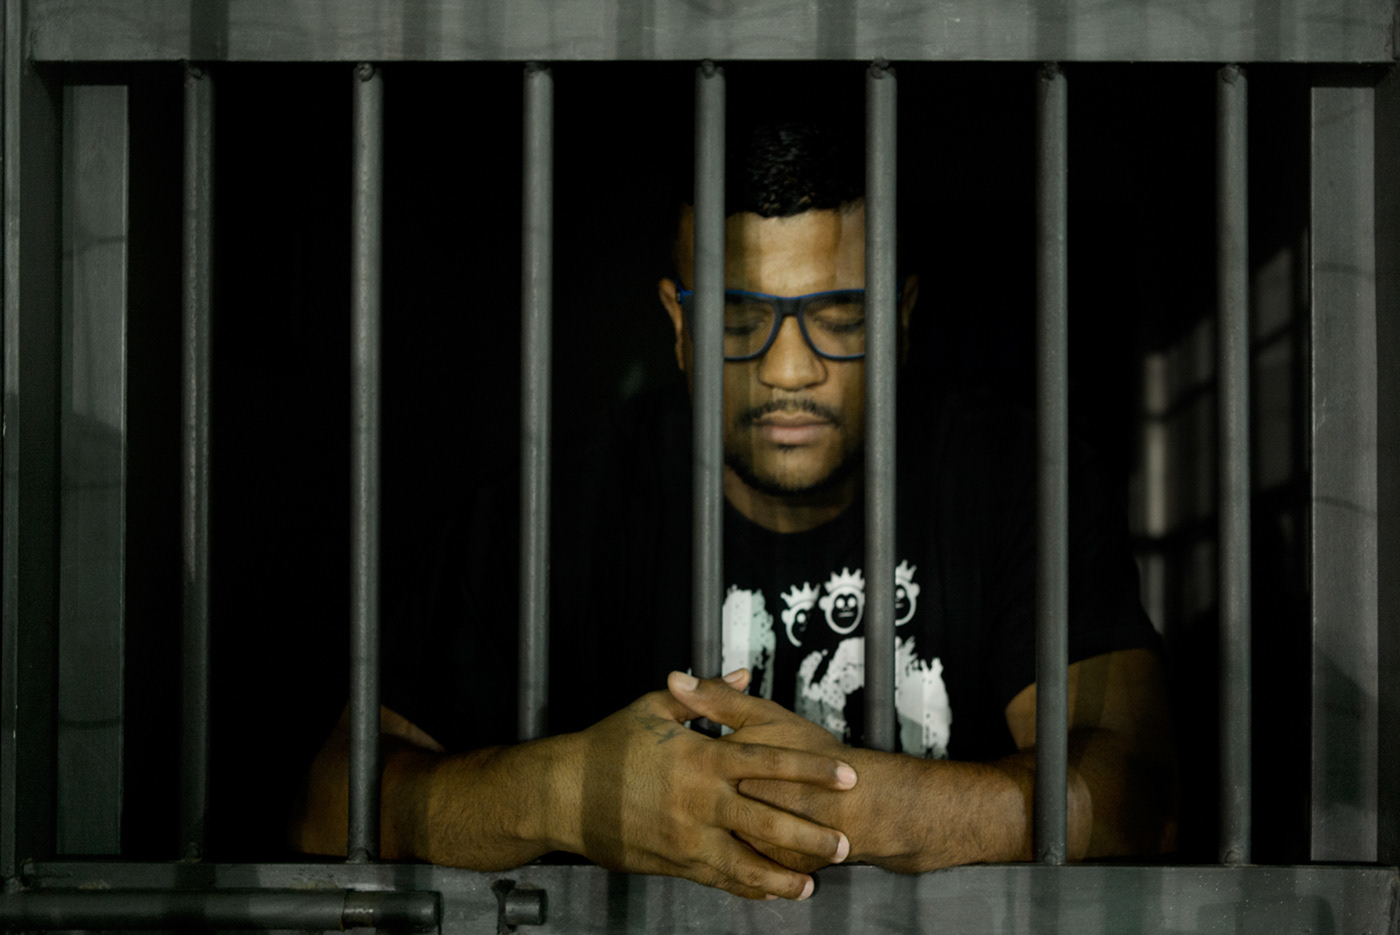 behind bars Cell inmates Jail Plethora portraits prison violence